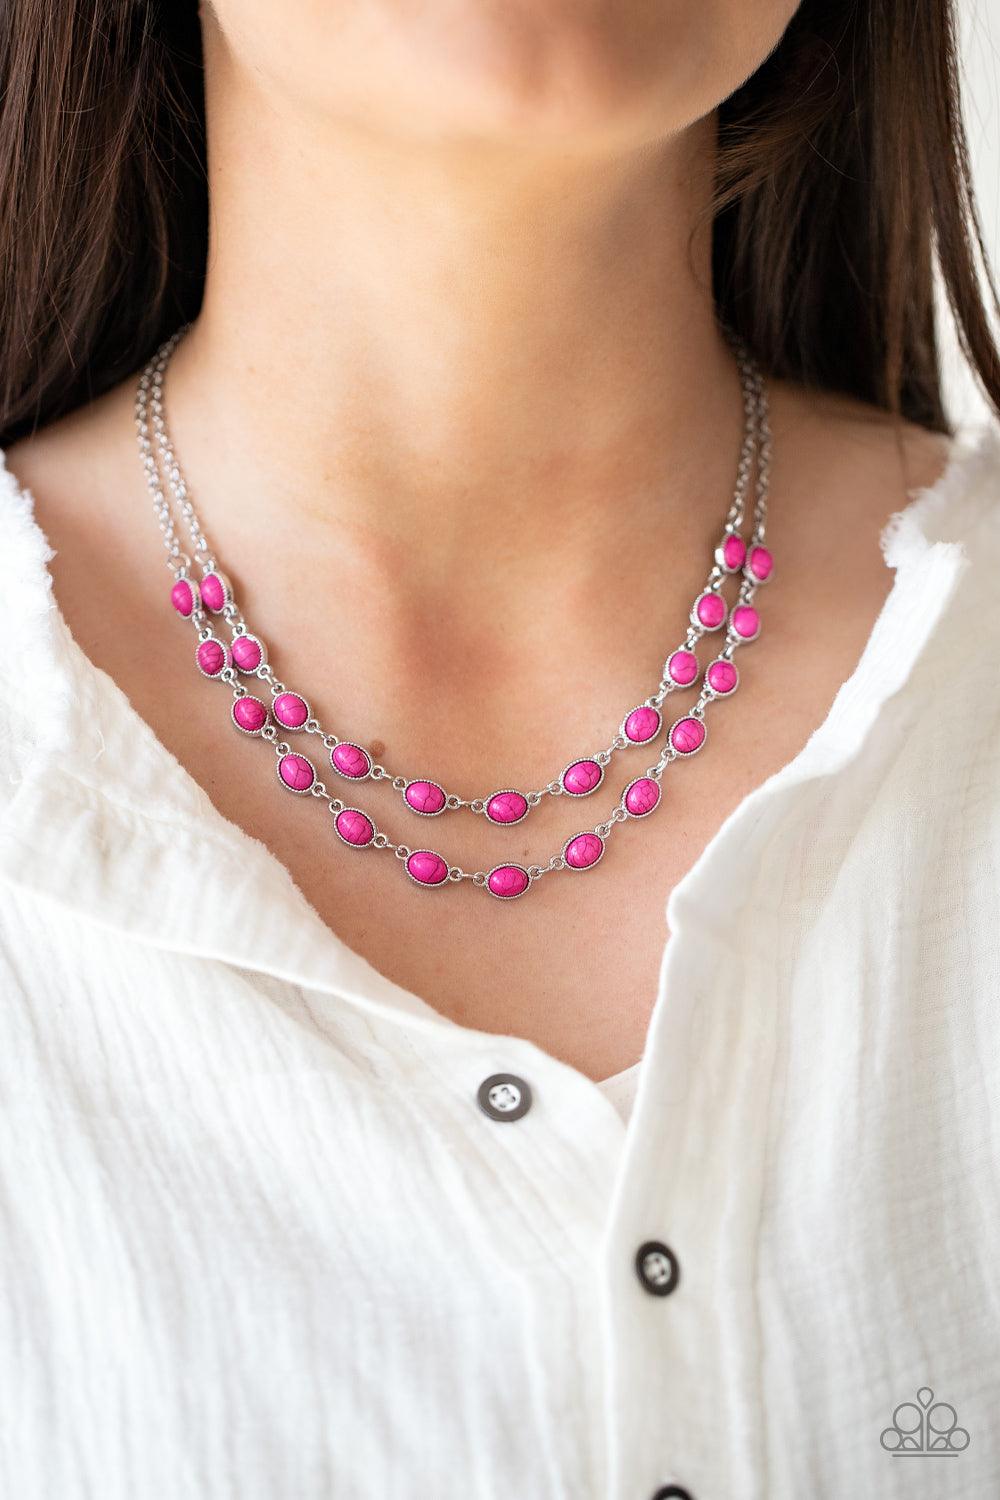 Sahara Safari Pink Necklace - Jewelry by Bretta